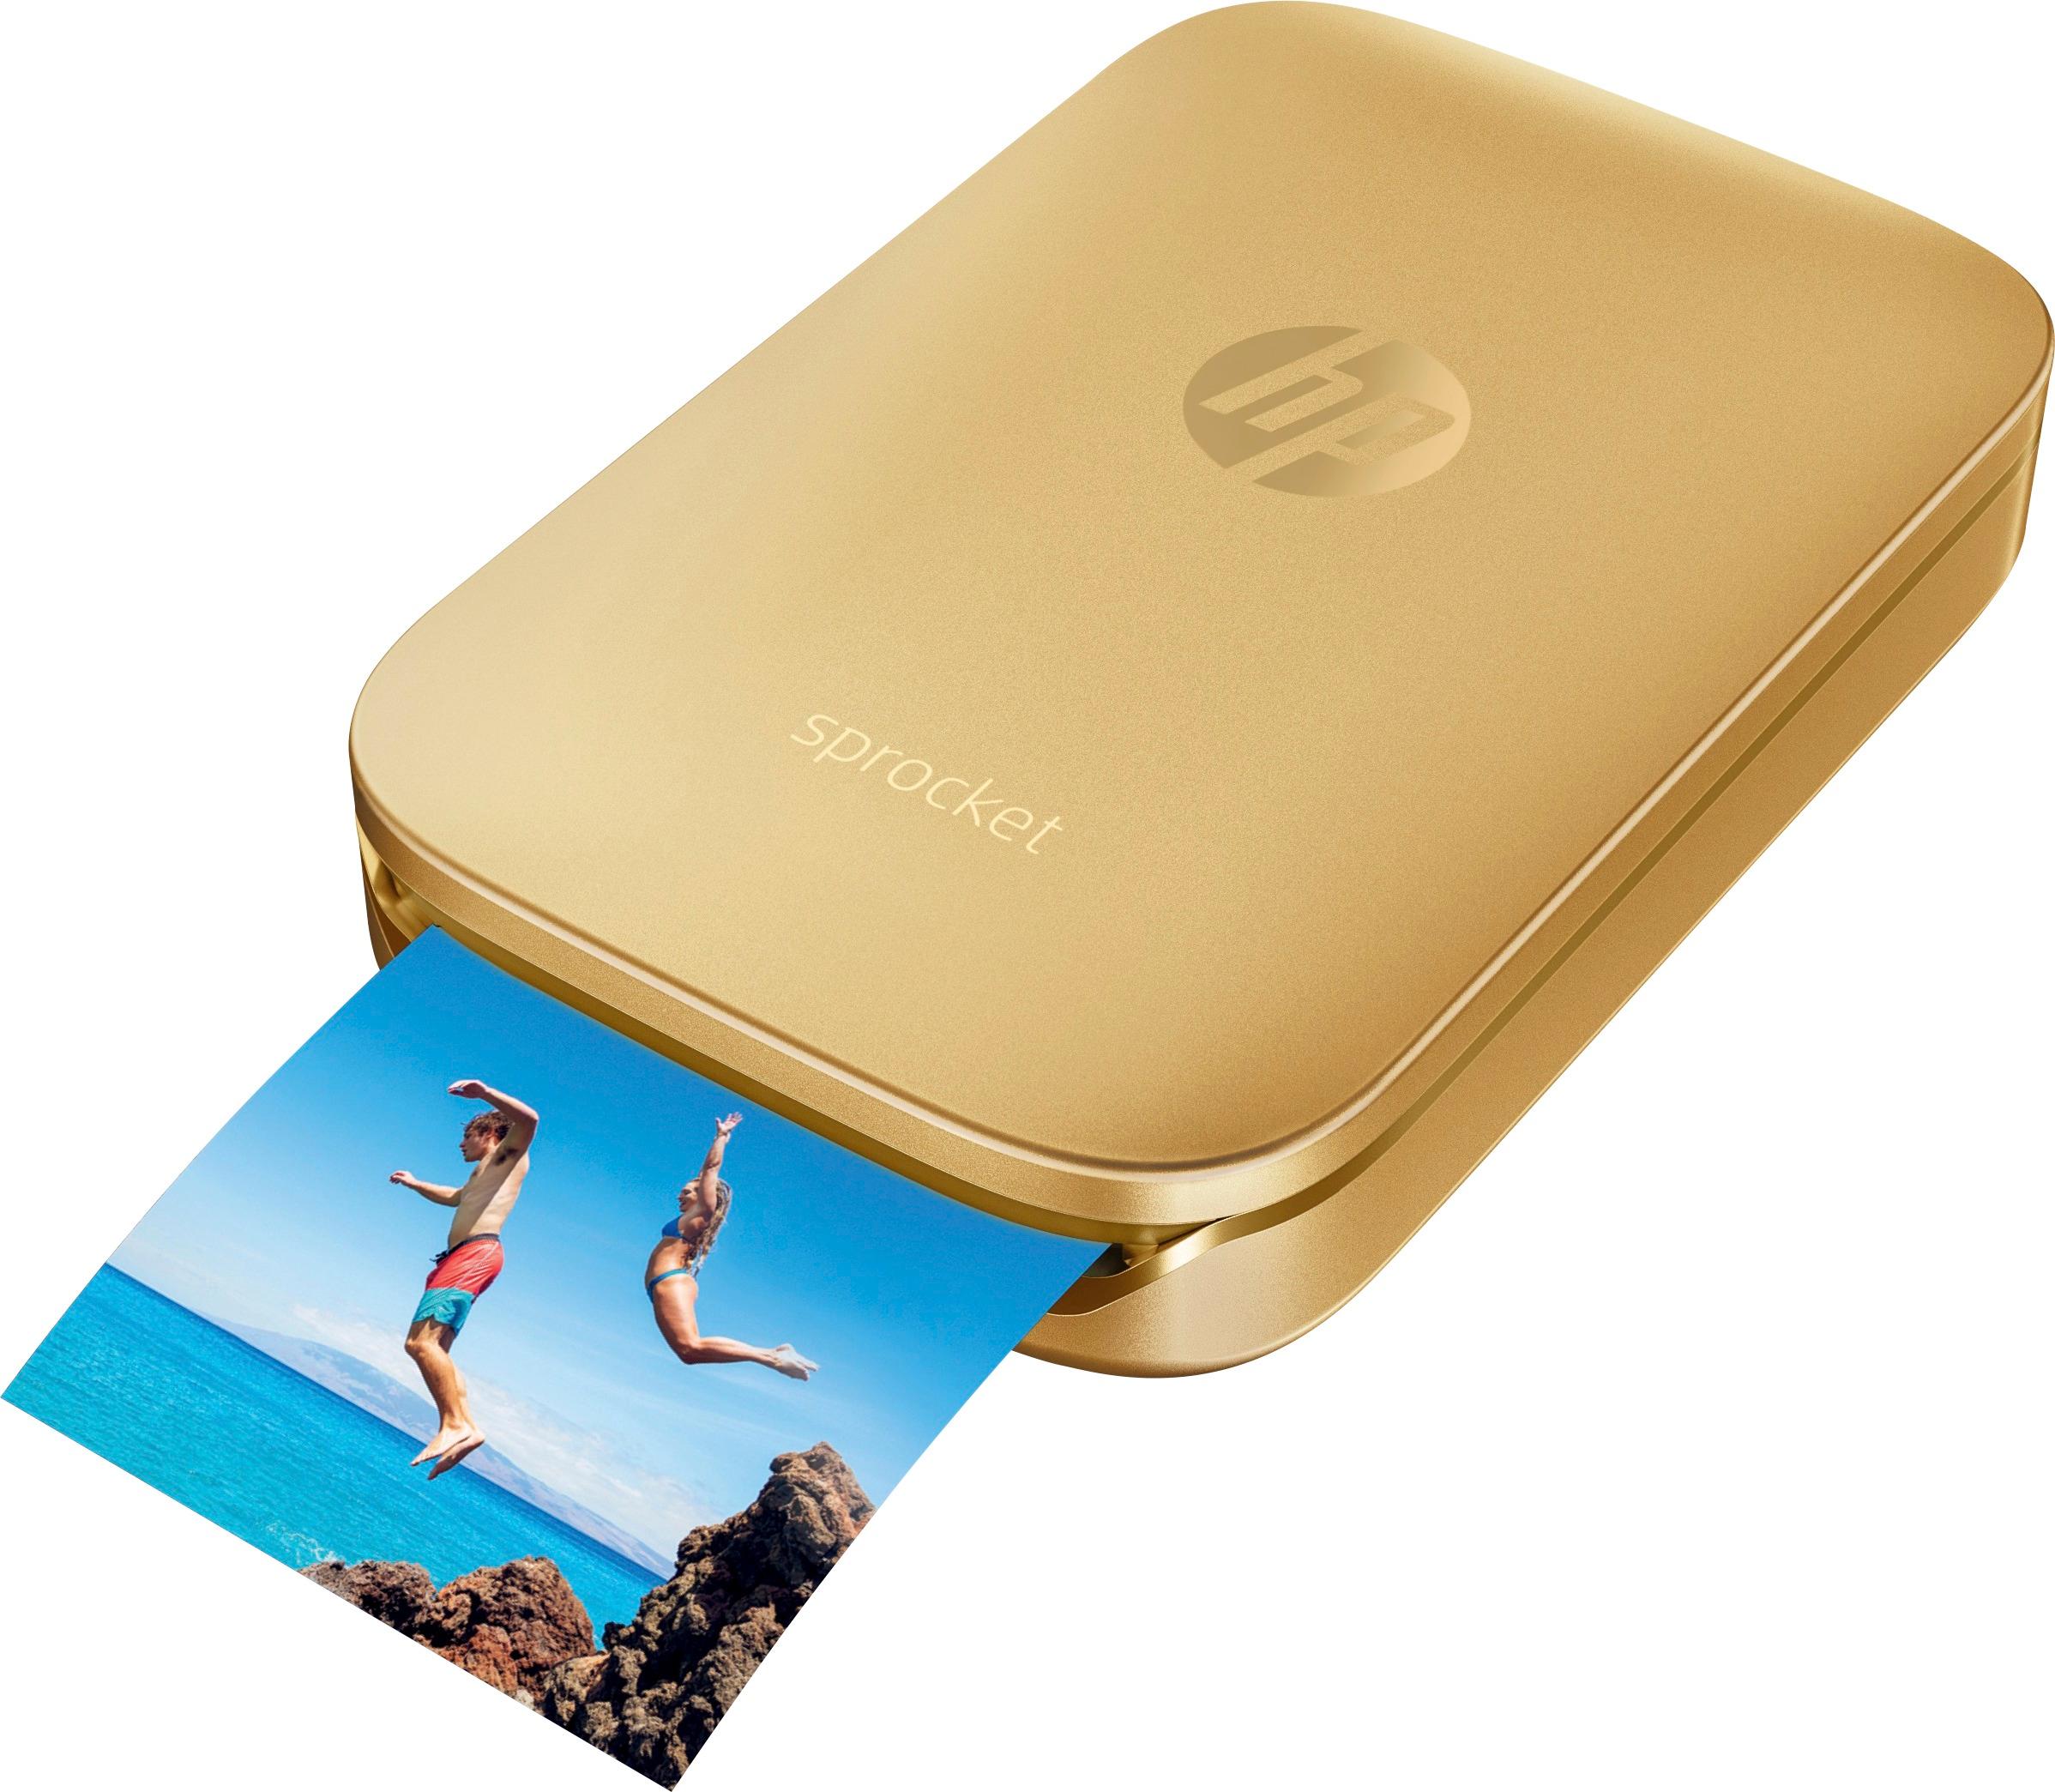 BRAND NEW! HP Sprocket Portable Photo Printer Gold (Z3Z94A) First Edition